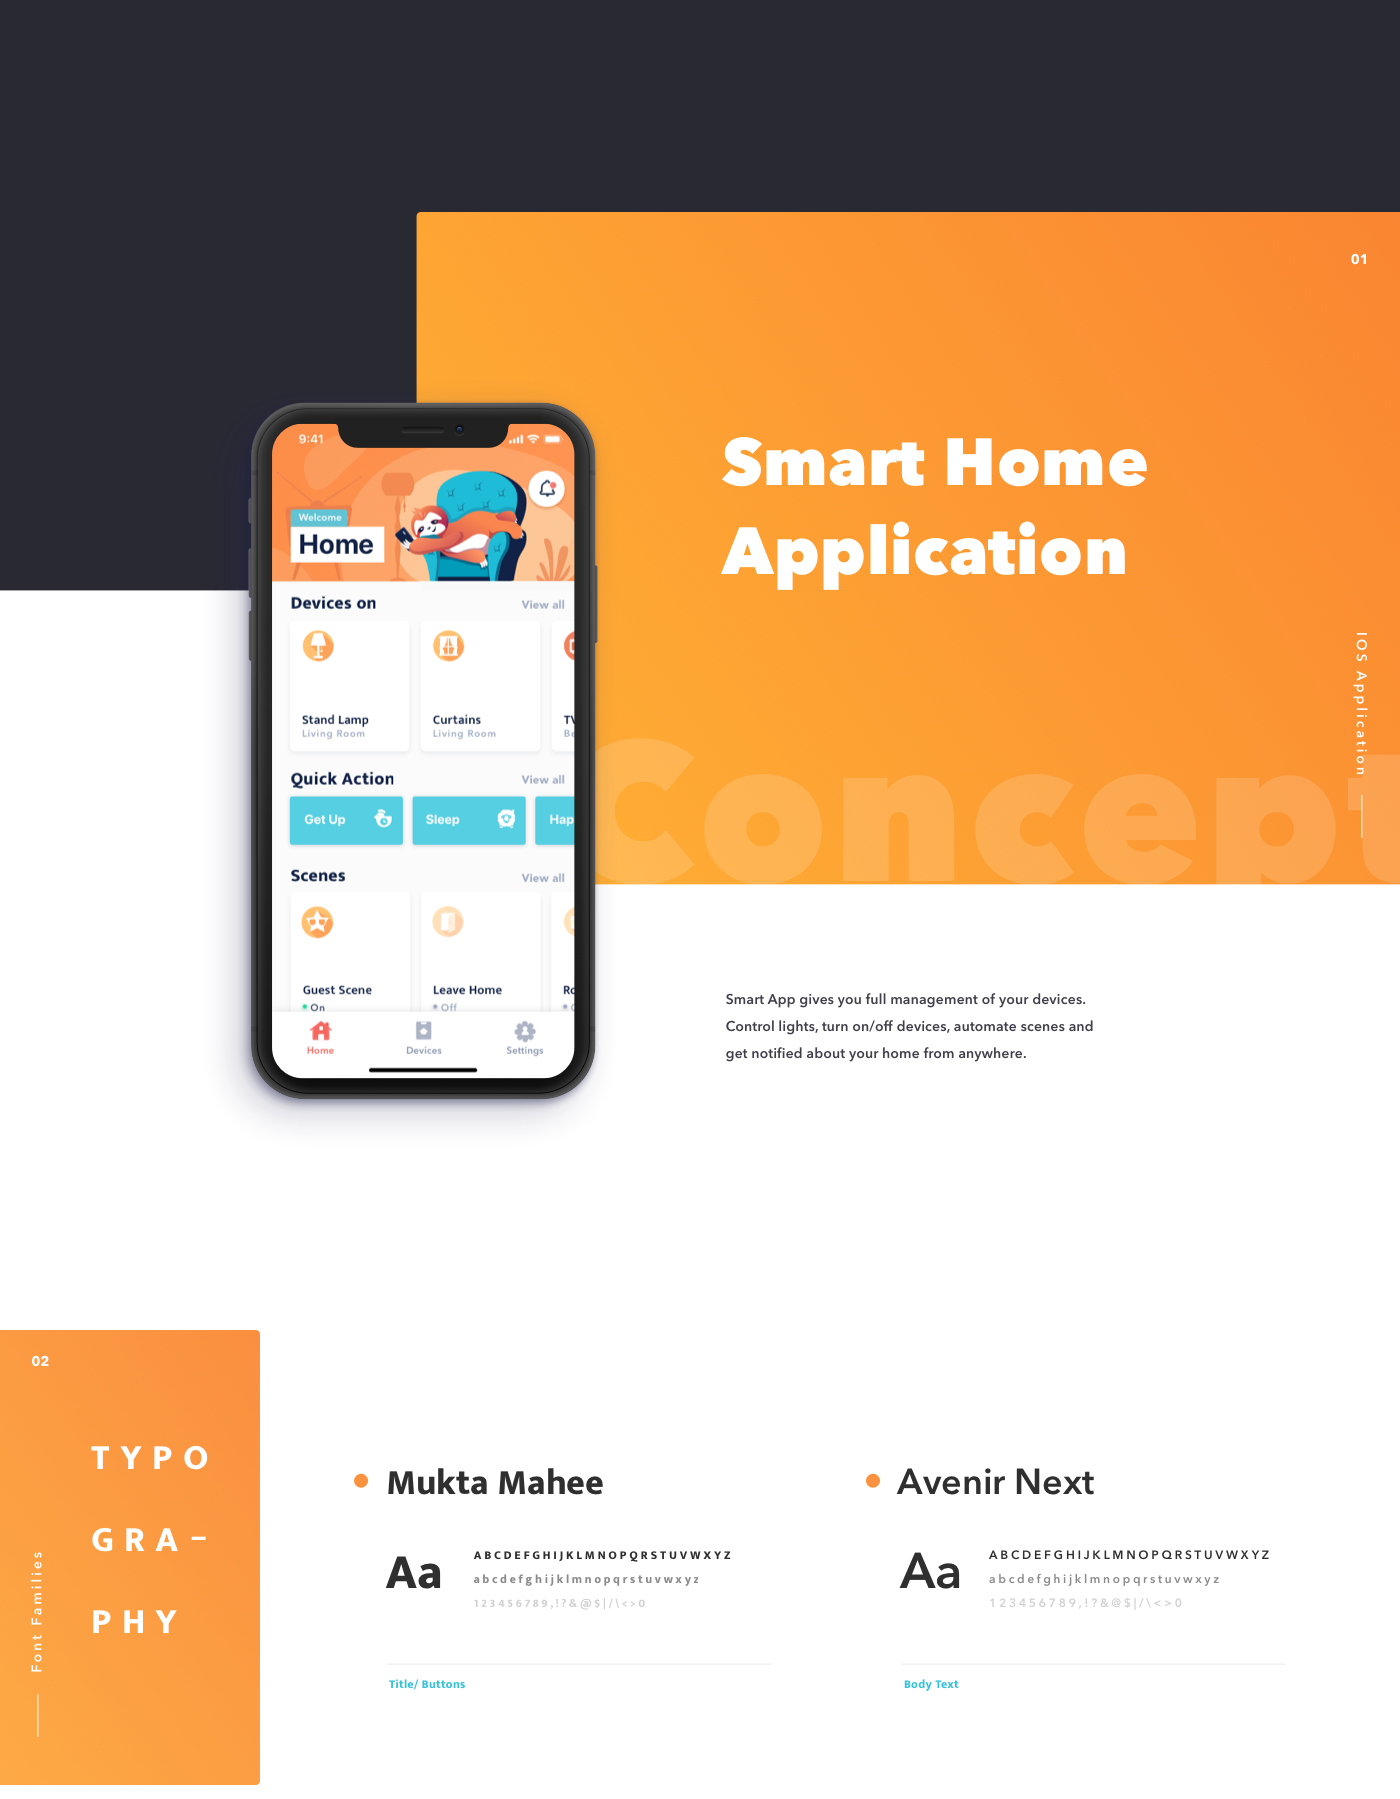 Dark mode screenss idea #212: Smart Home App - IOS